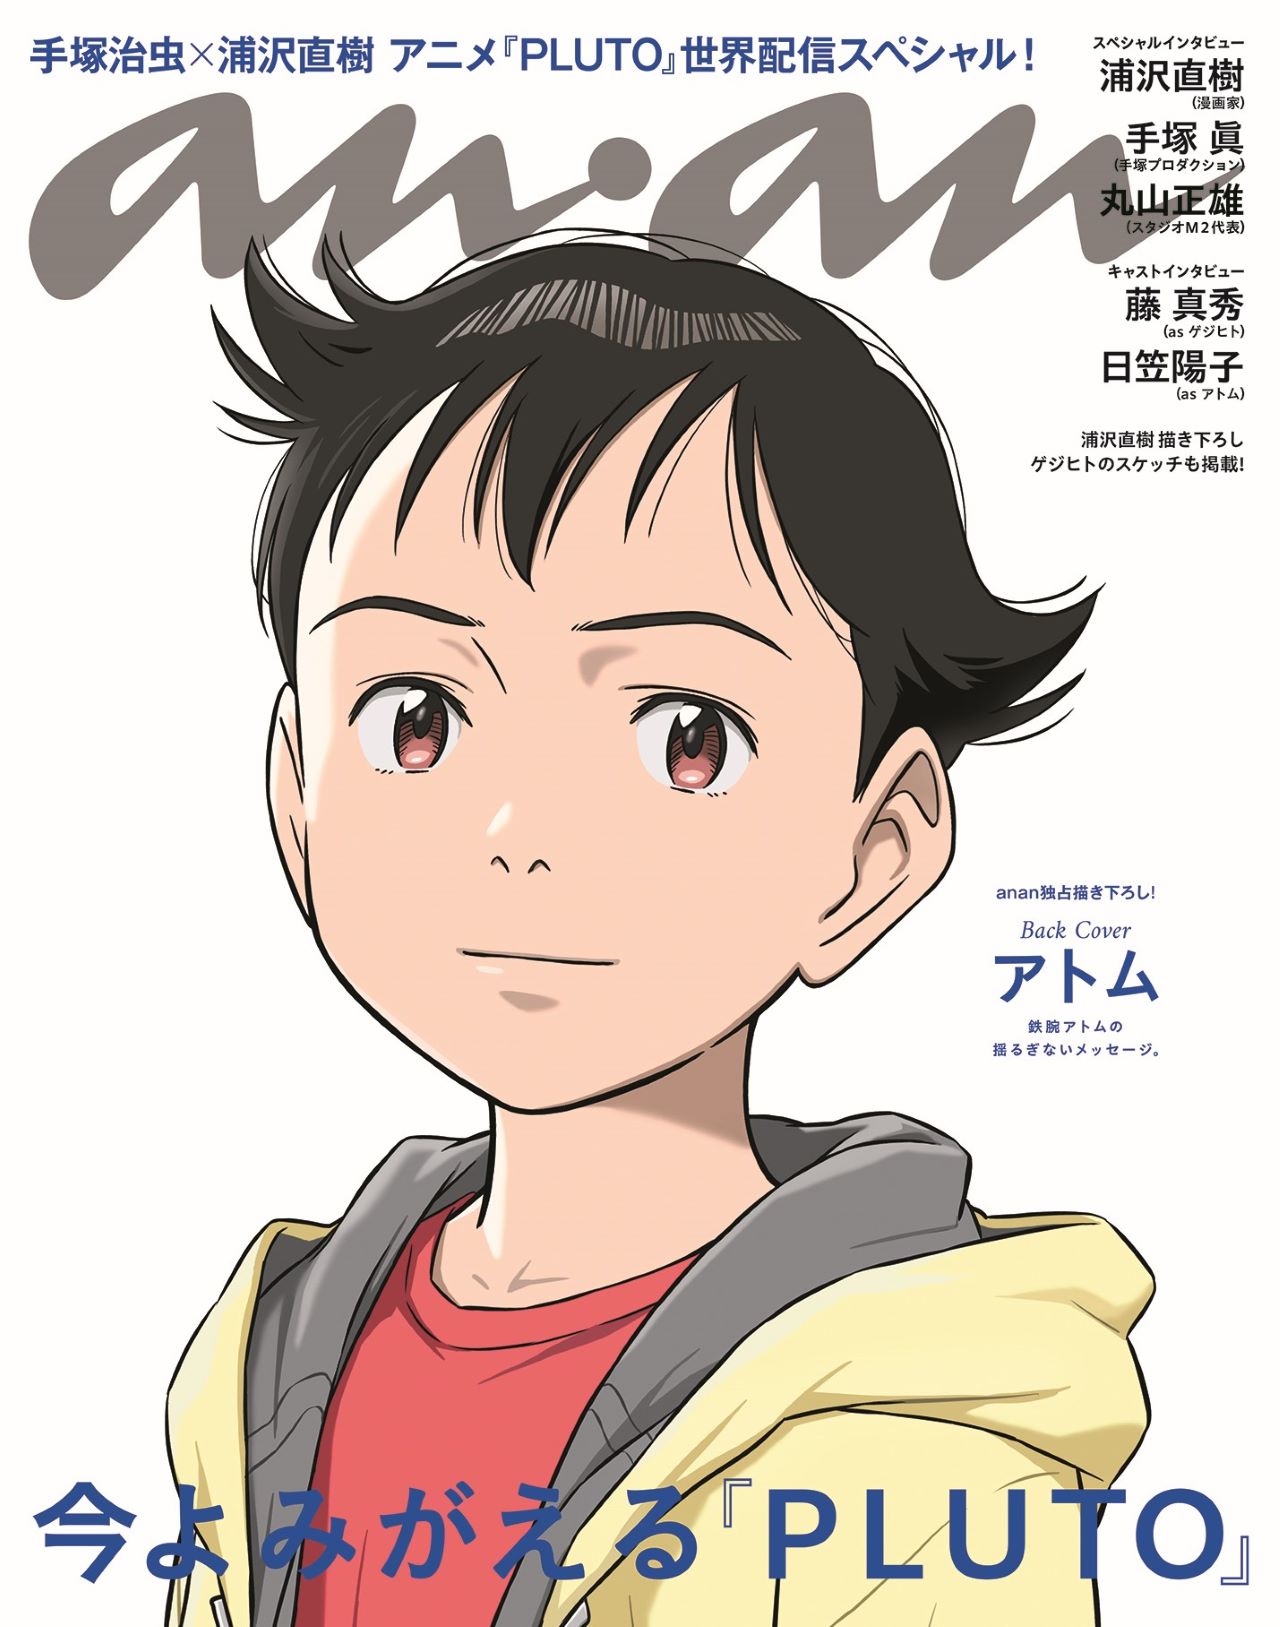 Manga Mogura RE (Manga & Anime News) on X: PLUTO anime, based on the  manga by Naoki Urasawa & Osamu Tezuka, is on back cover of upcoming Anan  issue No.2366 Anime release